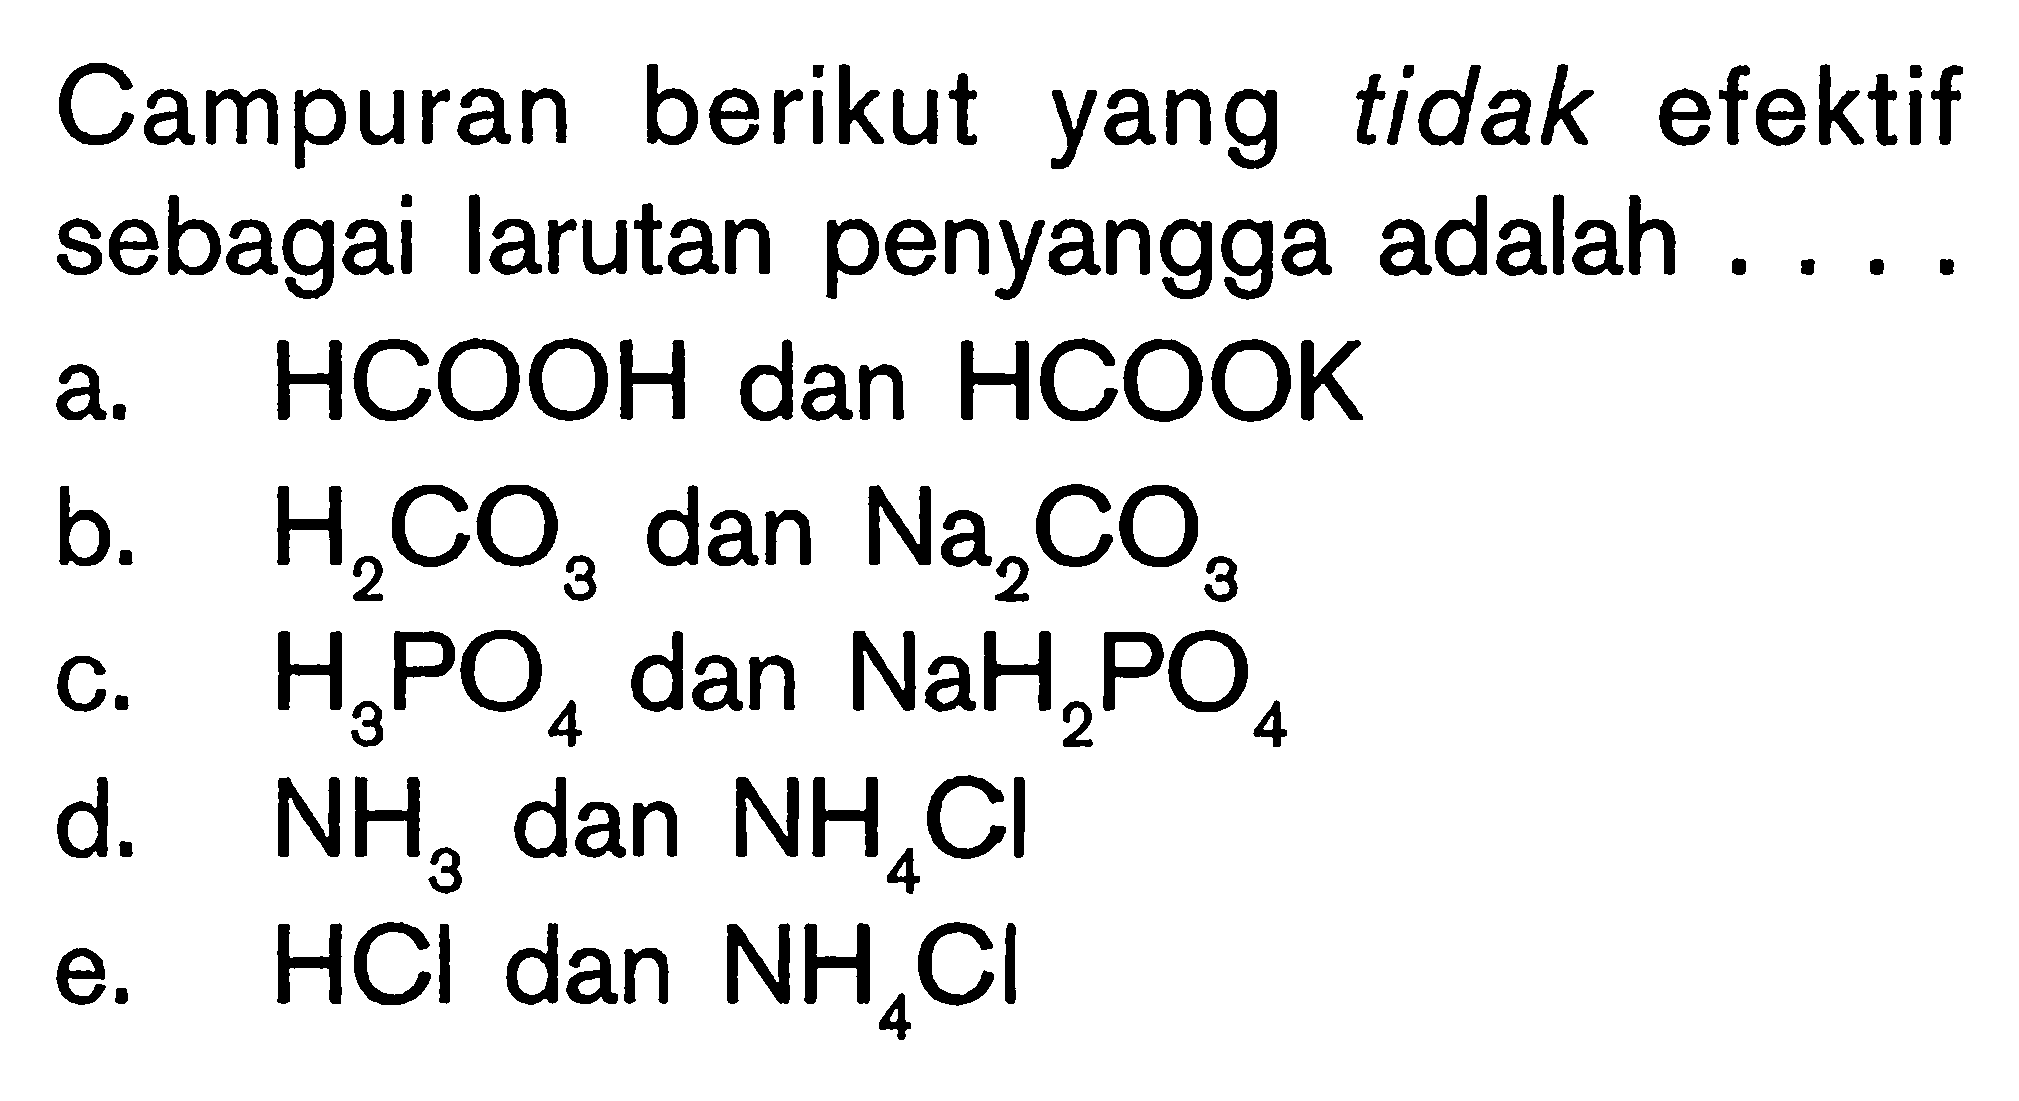 Campuran berikut yang tidak efektif sebagai larutan penyangga adalah ....a.  HCOOH dan HCOOKb.  H2CO3 dan Na2CO3 c.  H3PO4 dan NaH2PO4 d.  NH3 dan NH4Cl e.  HCl dan NH4Cl 